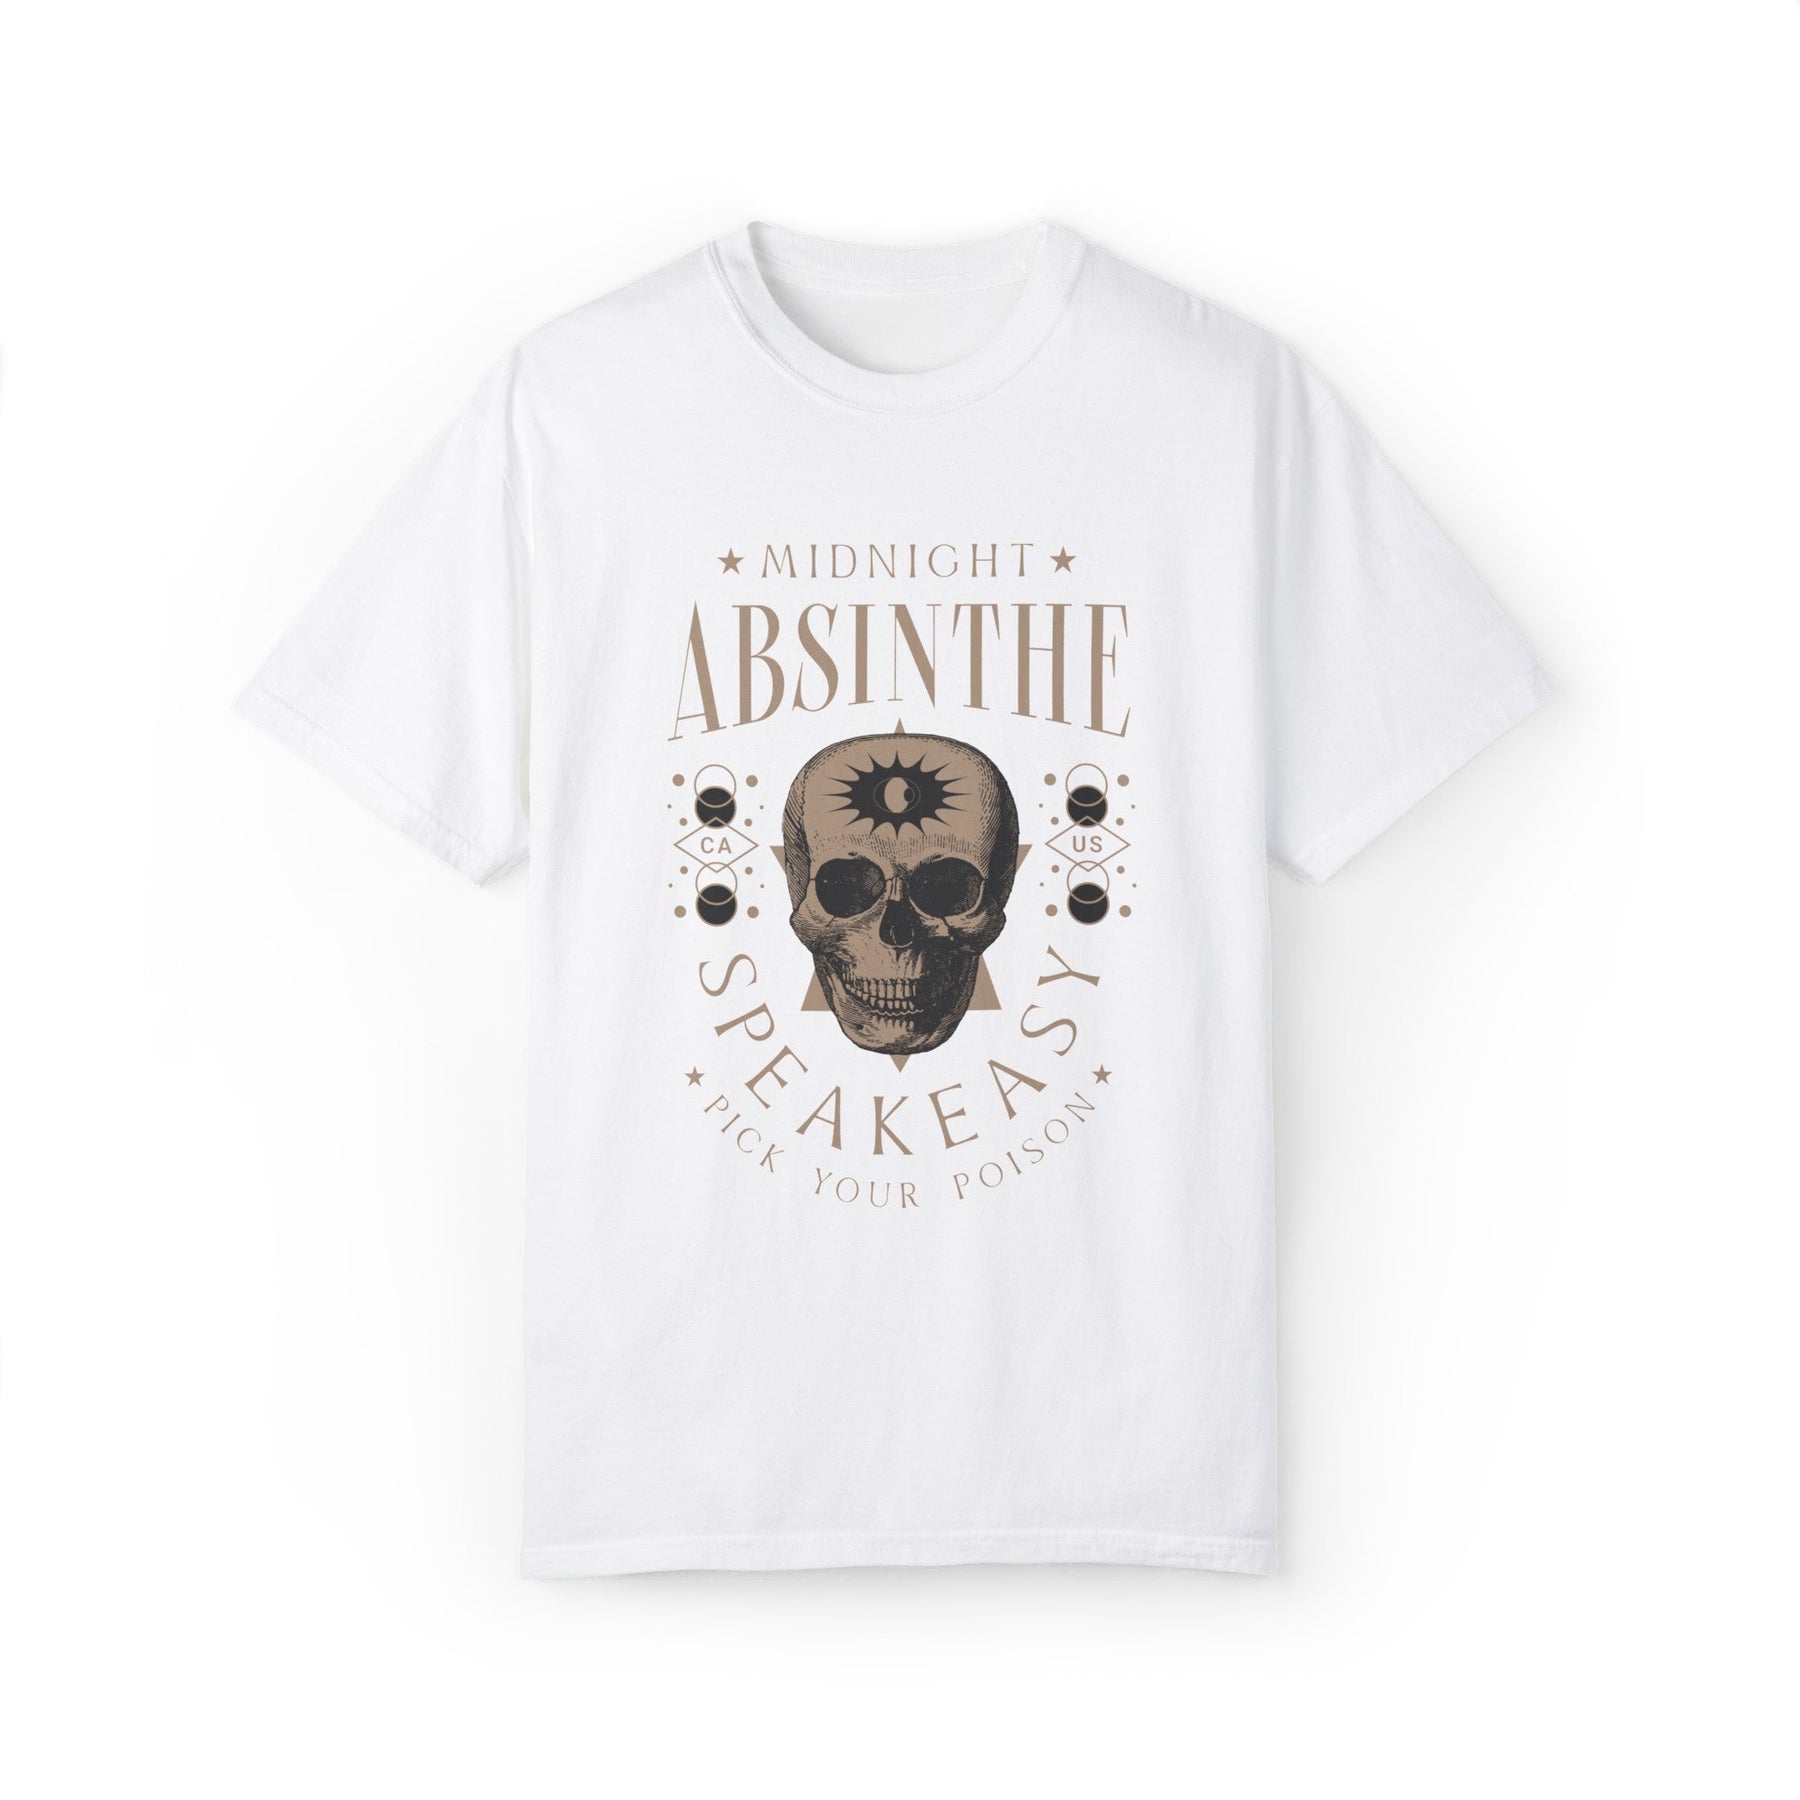 Midnight Absinthe Oversized Beefy Tee - Goth Cloth Co.T - Shirt32069614596866115468